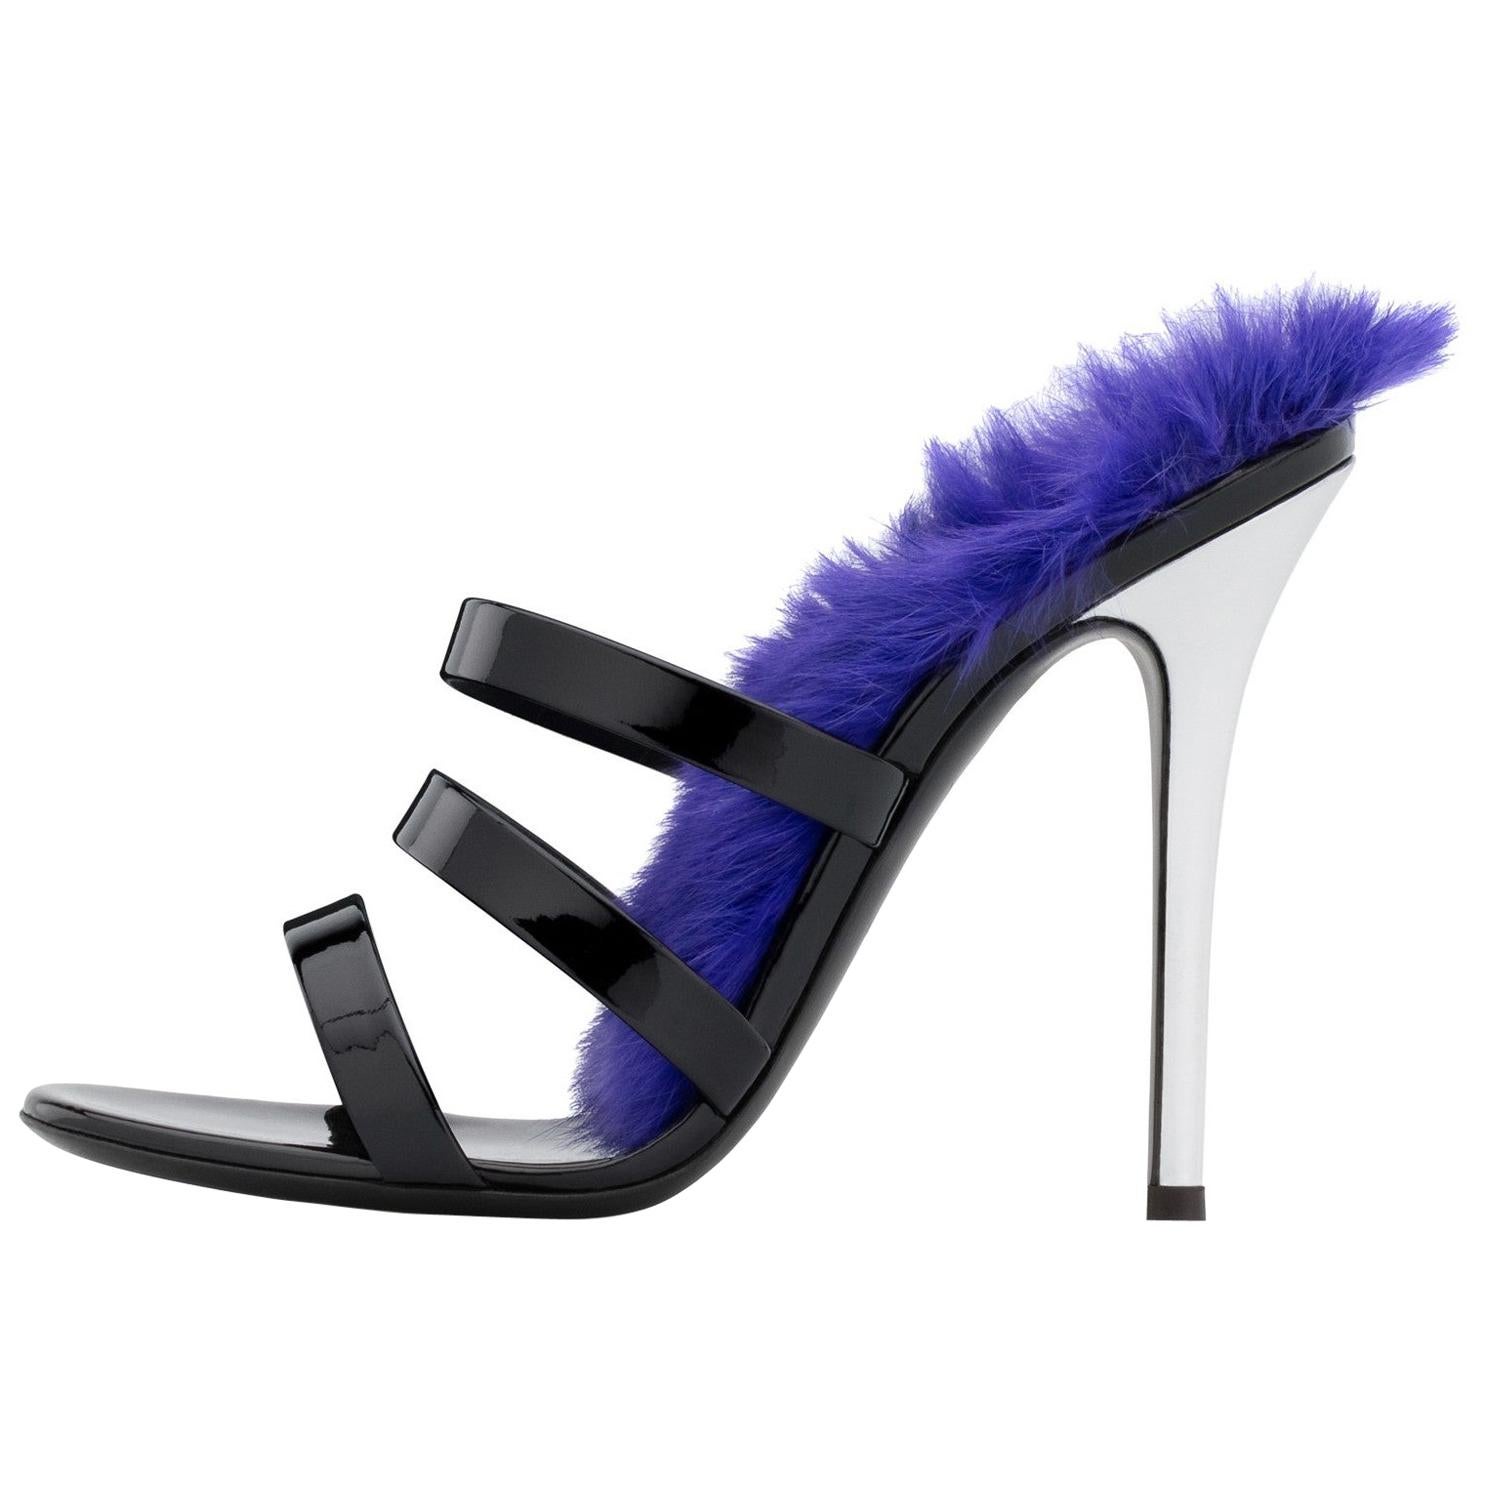 Giuseppe Zanotti NEW Black Patent Feather Evening Slides Sandals Heels in Box